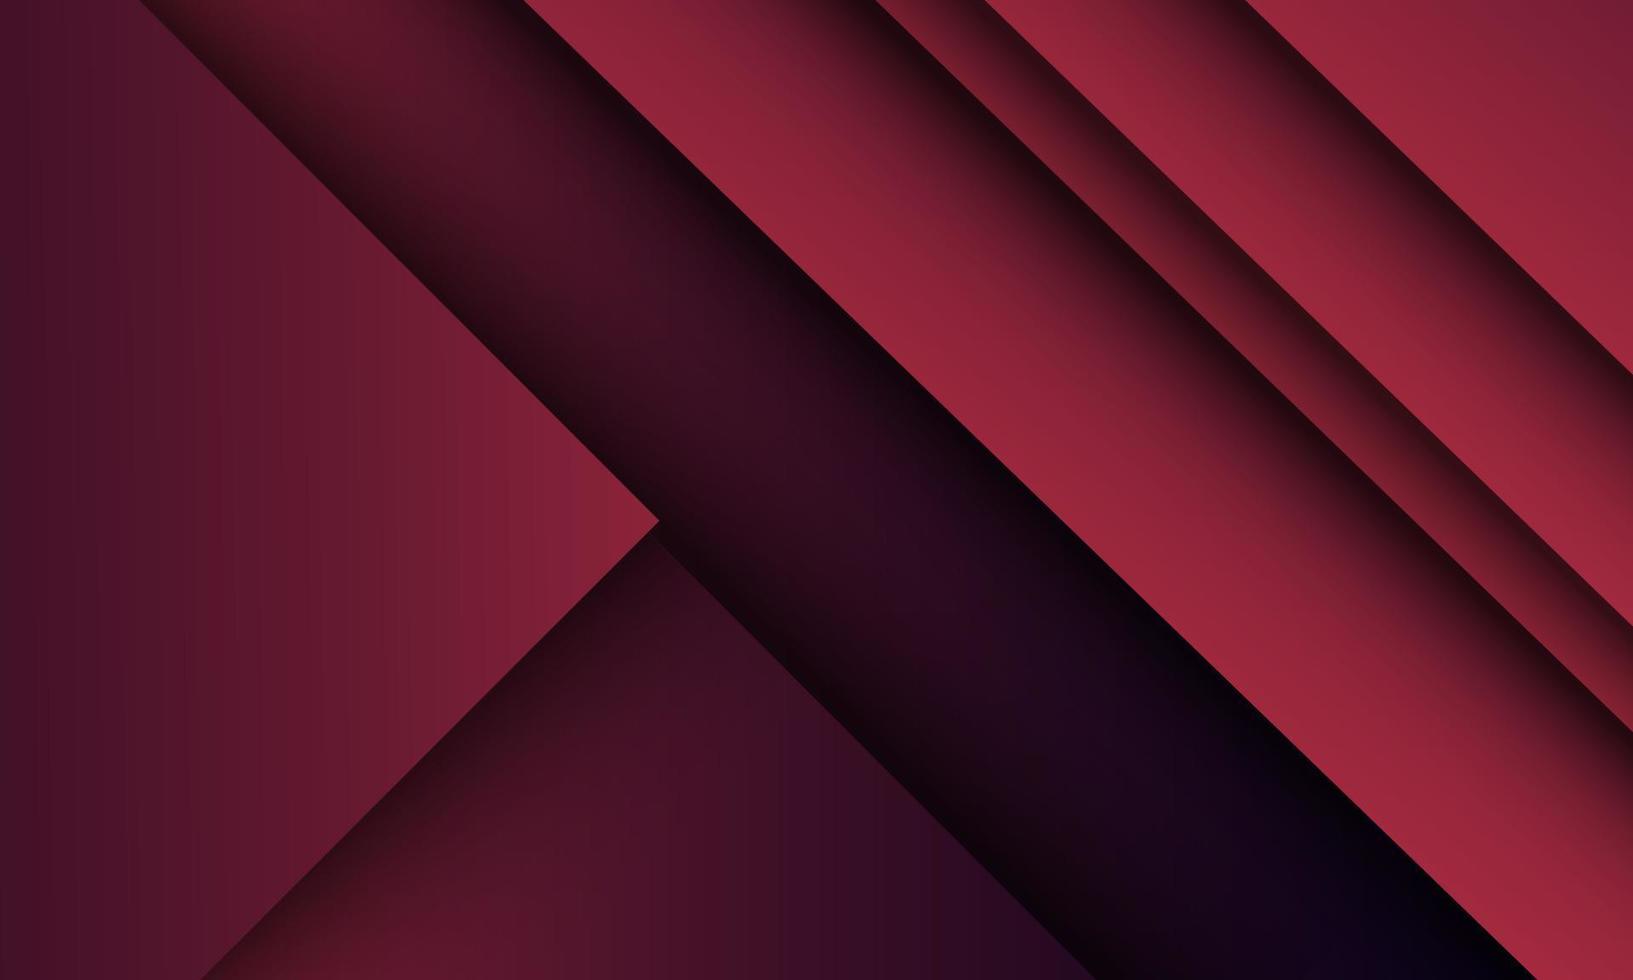 Abstract dark purple background vector overlap layer on dark space for background design. Illustration Vector design digital technology concept.